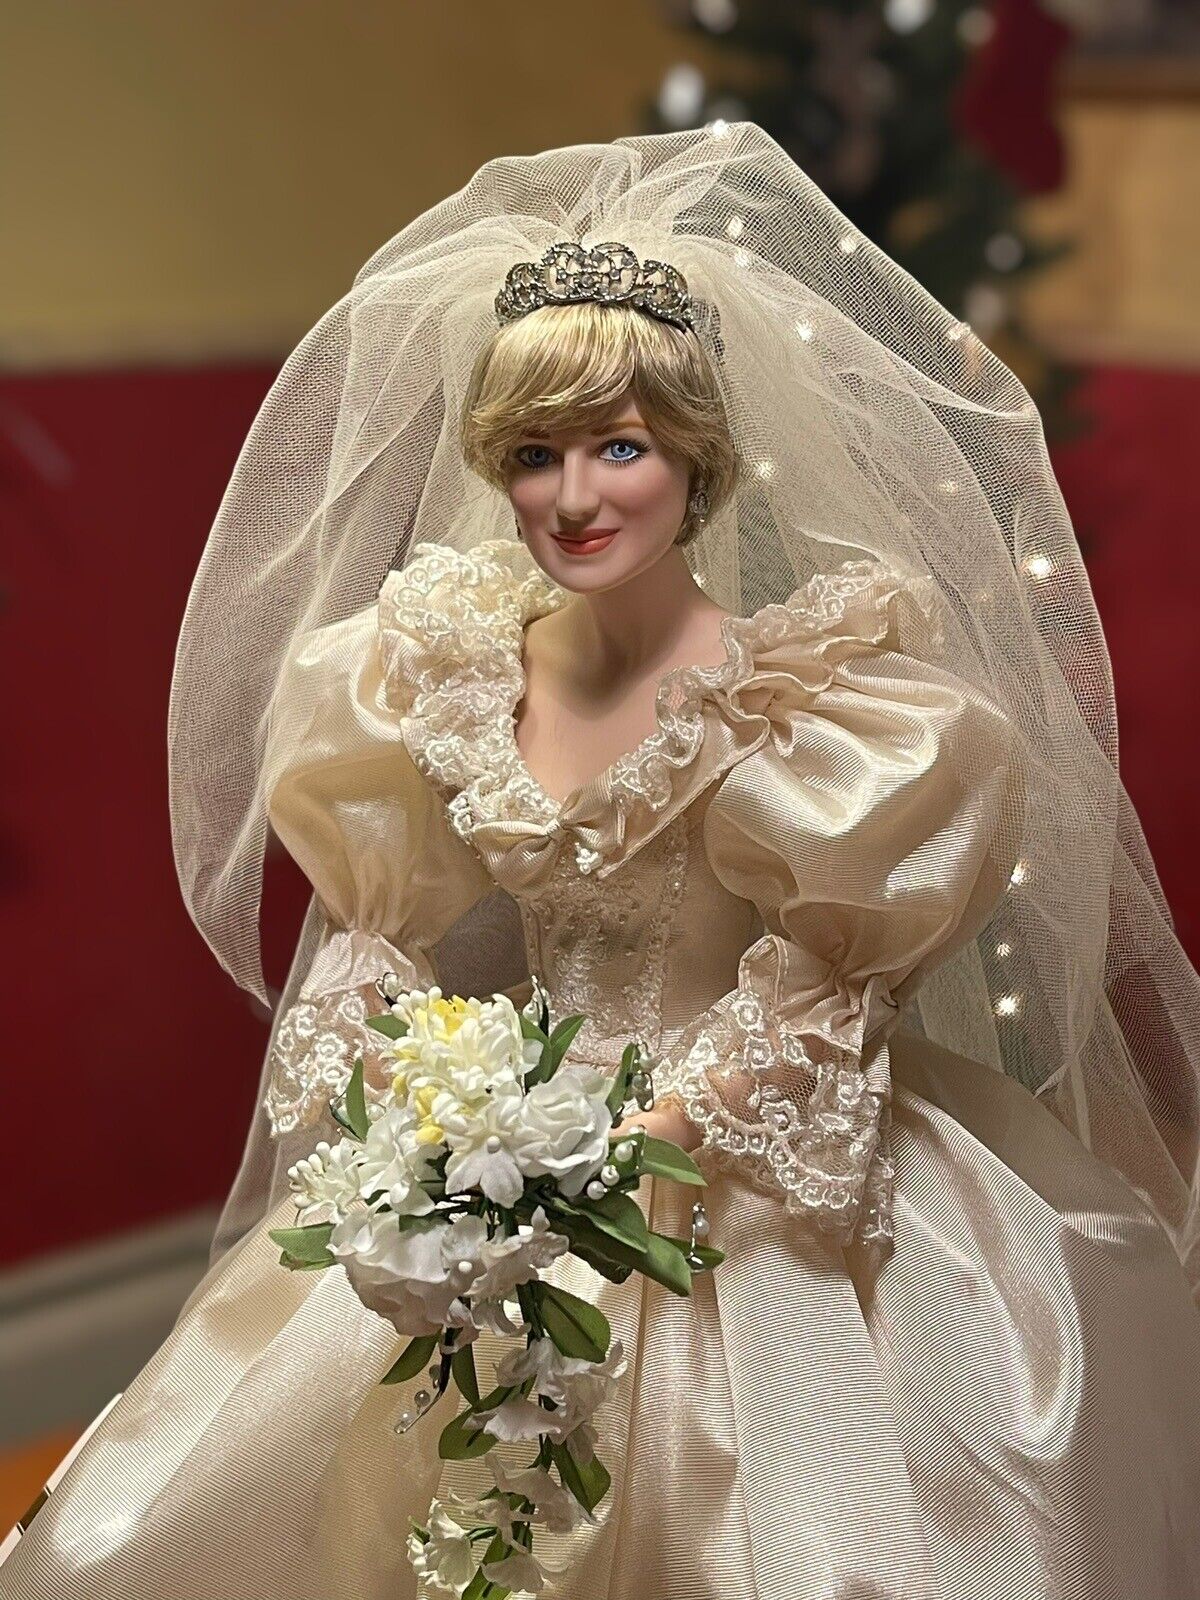 Franklin Mint Princess Diana 25th Anniv. Wedding Dress LE Portrait Doll 18